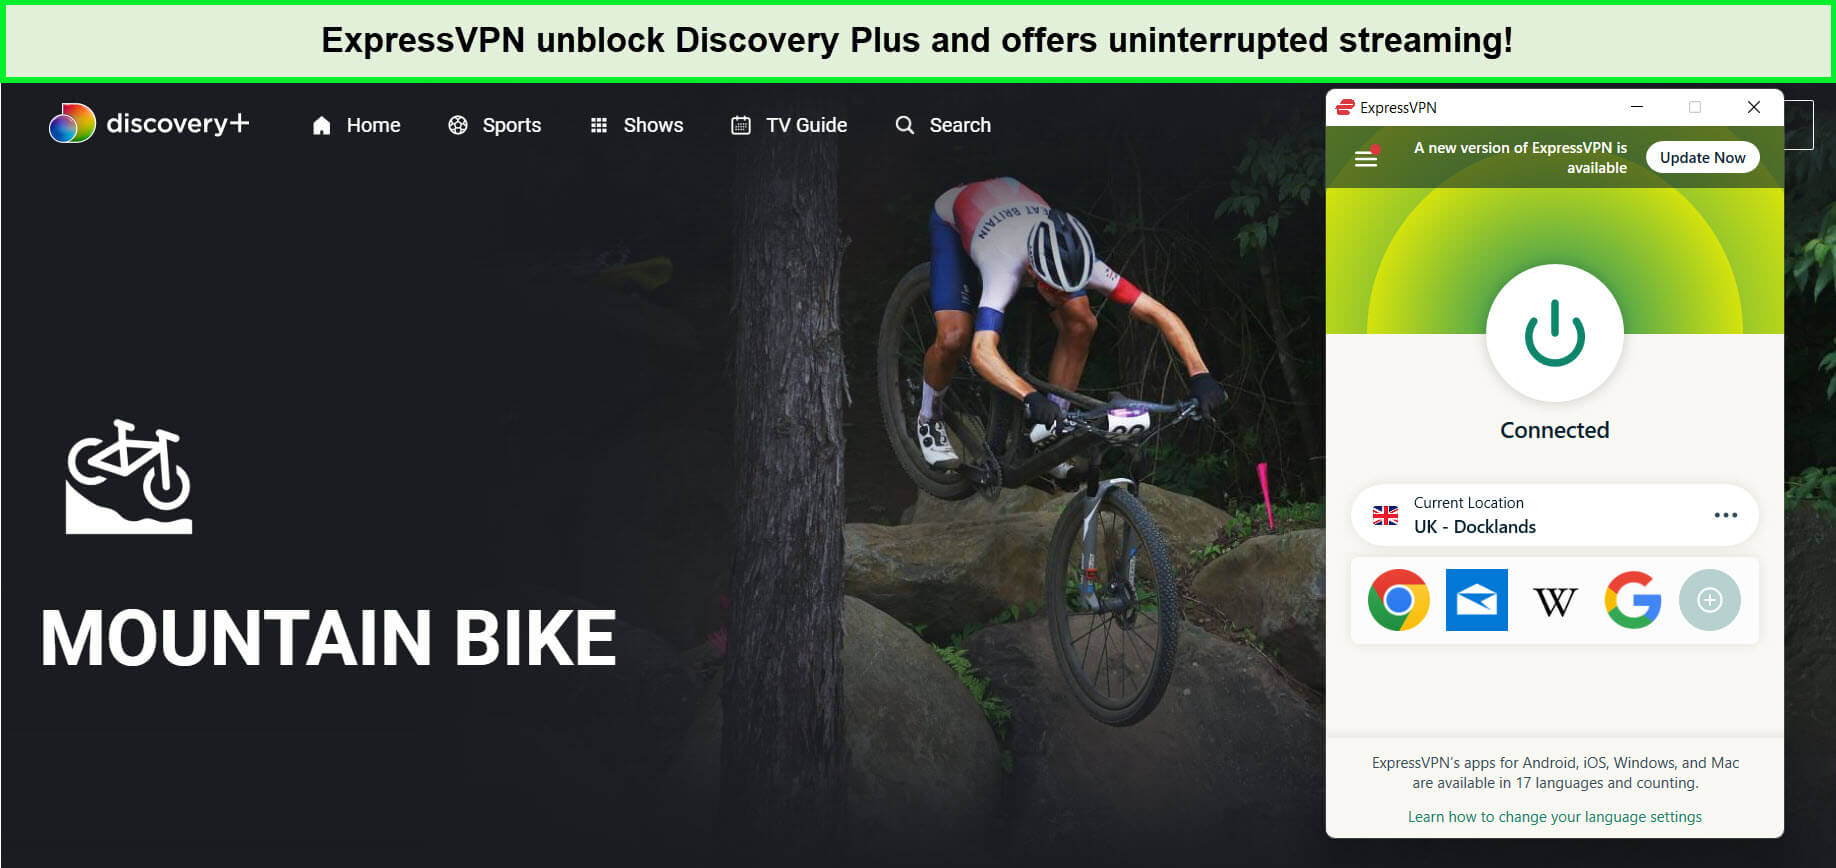 expressvpn-unblocks-uci-mountain-bike-world-series-outside-UK-on-discovery-plus